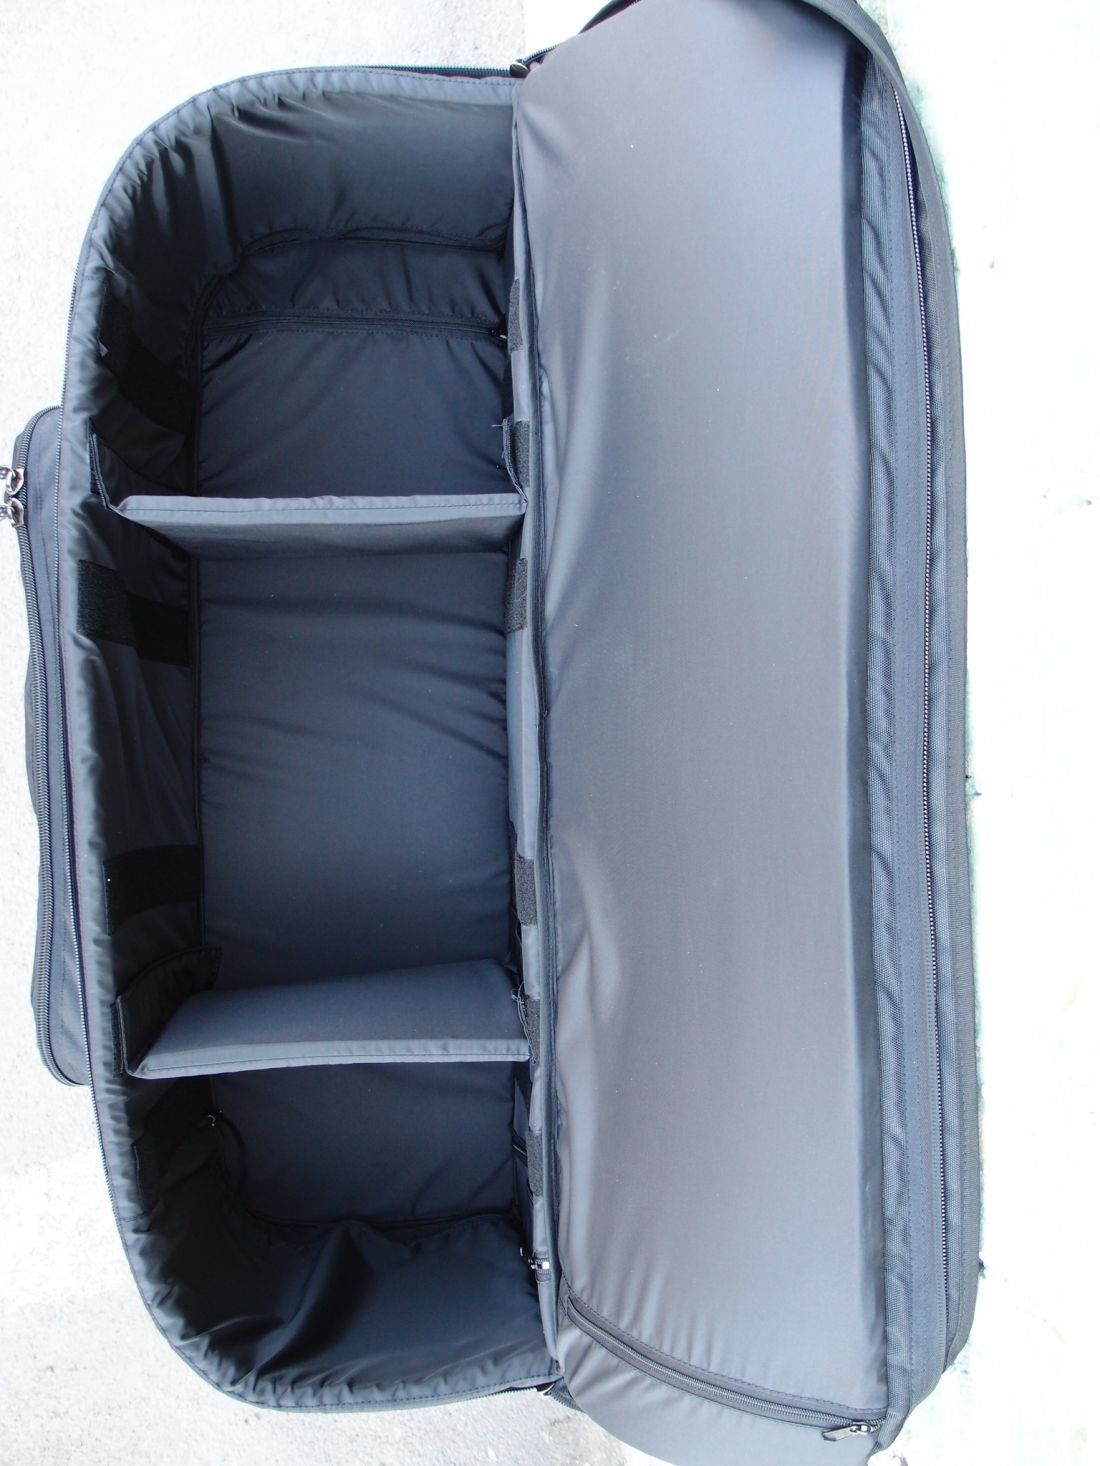 Baseg Компактный кофр сумка на багажник задний Baseg Yamaha Grizzli 700 ( )